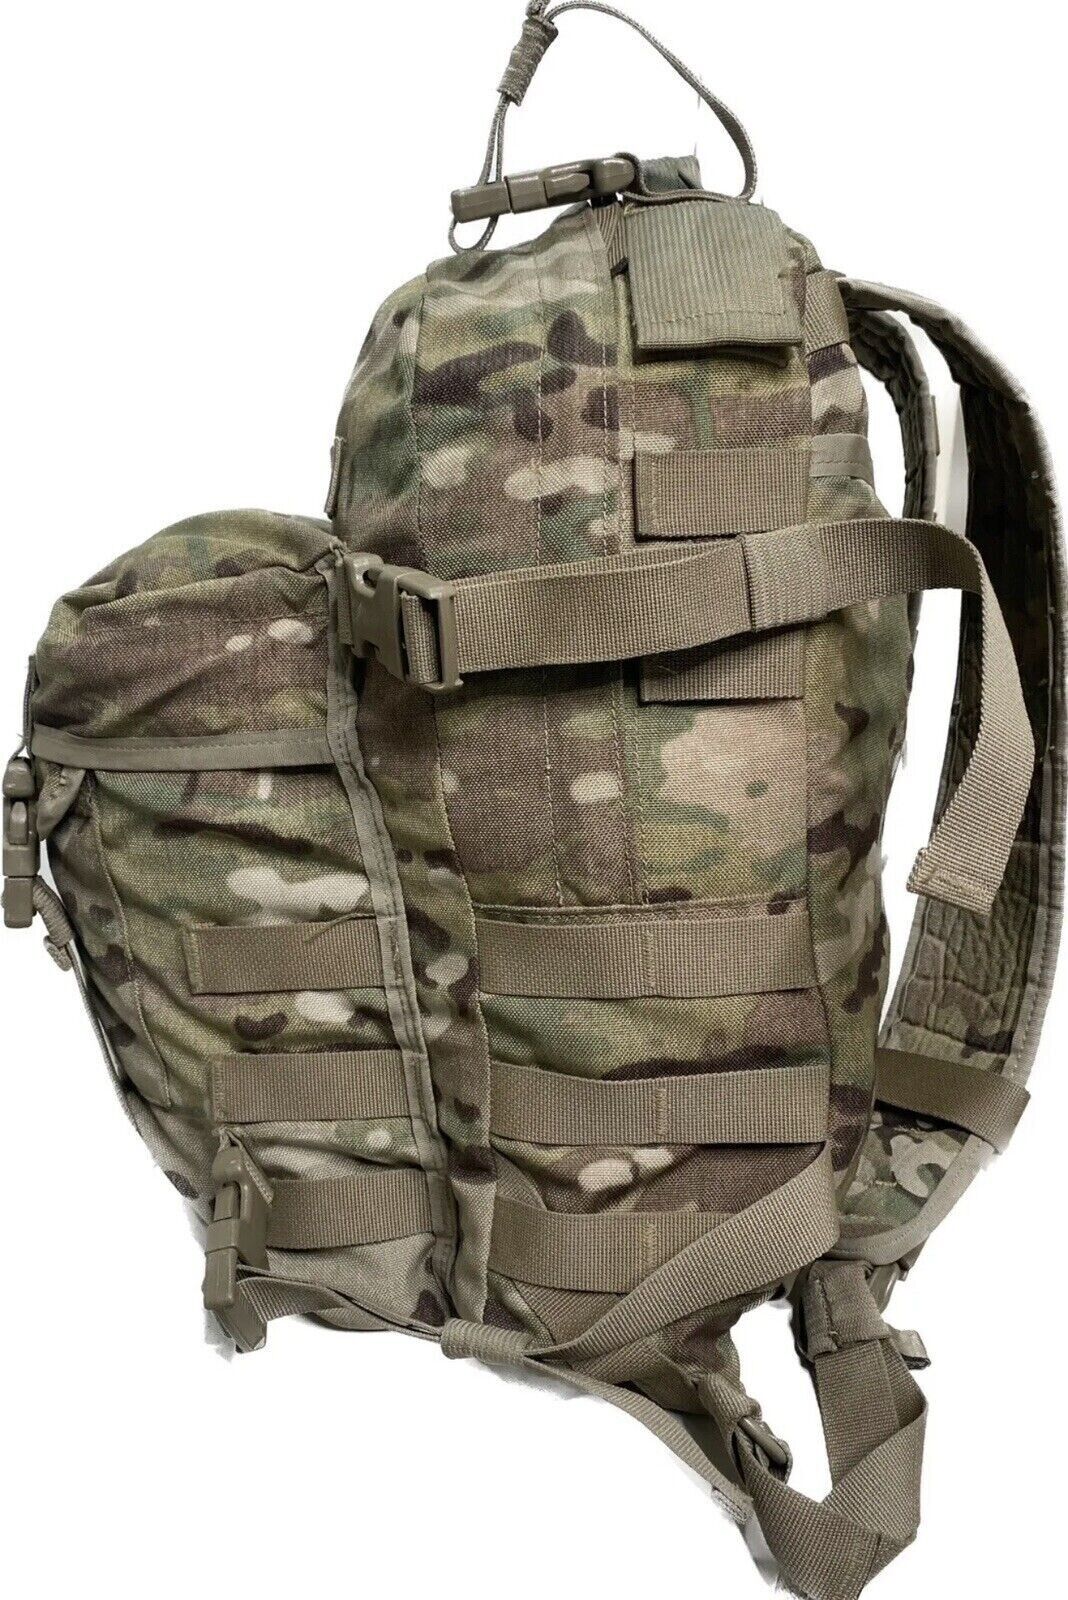 USGI Multicam OCP MOLLE Assault Pack, 3 Day Army Assault Backpack w/ Stiffner